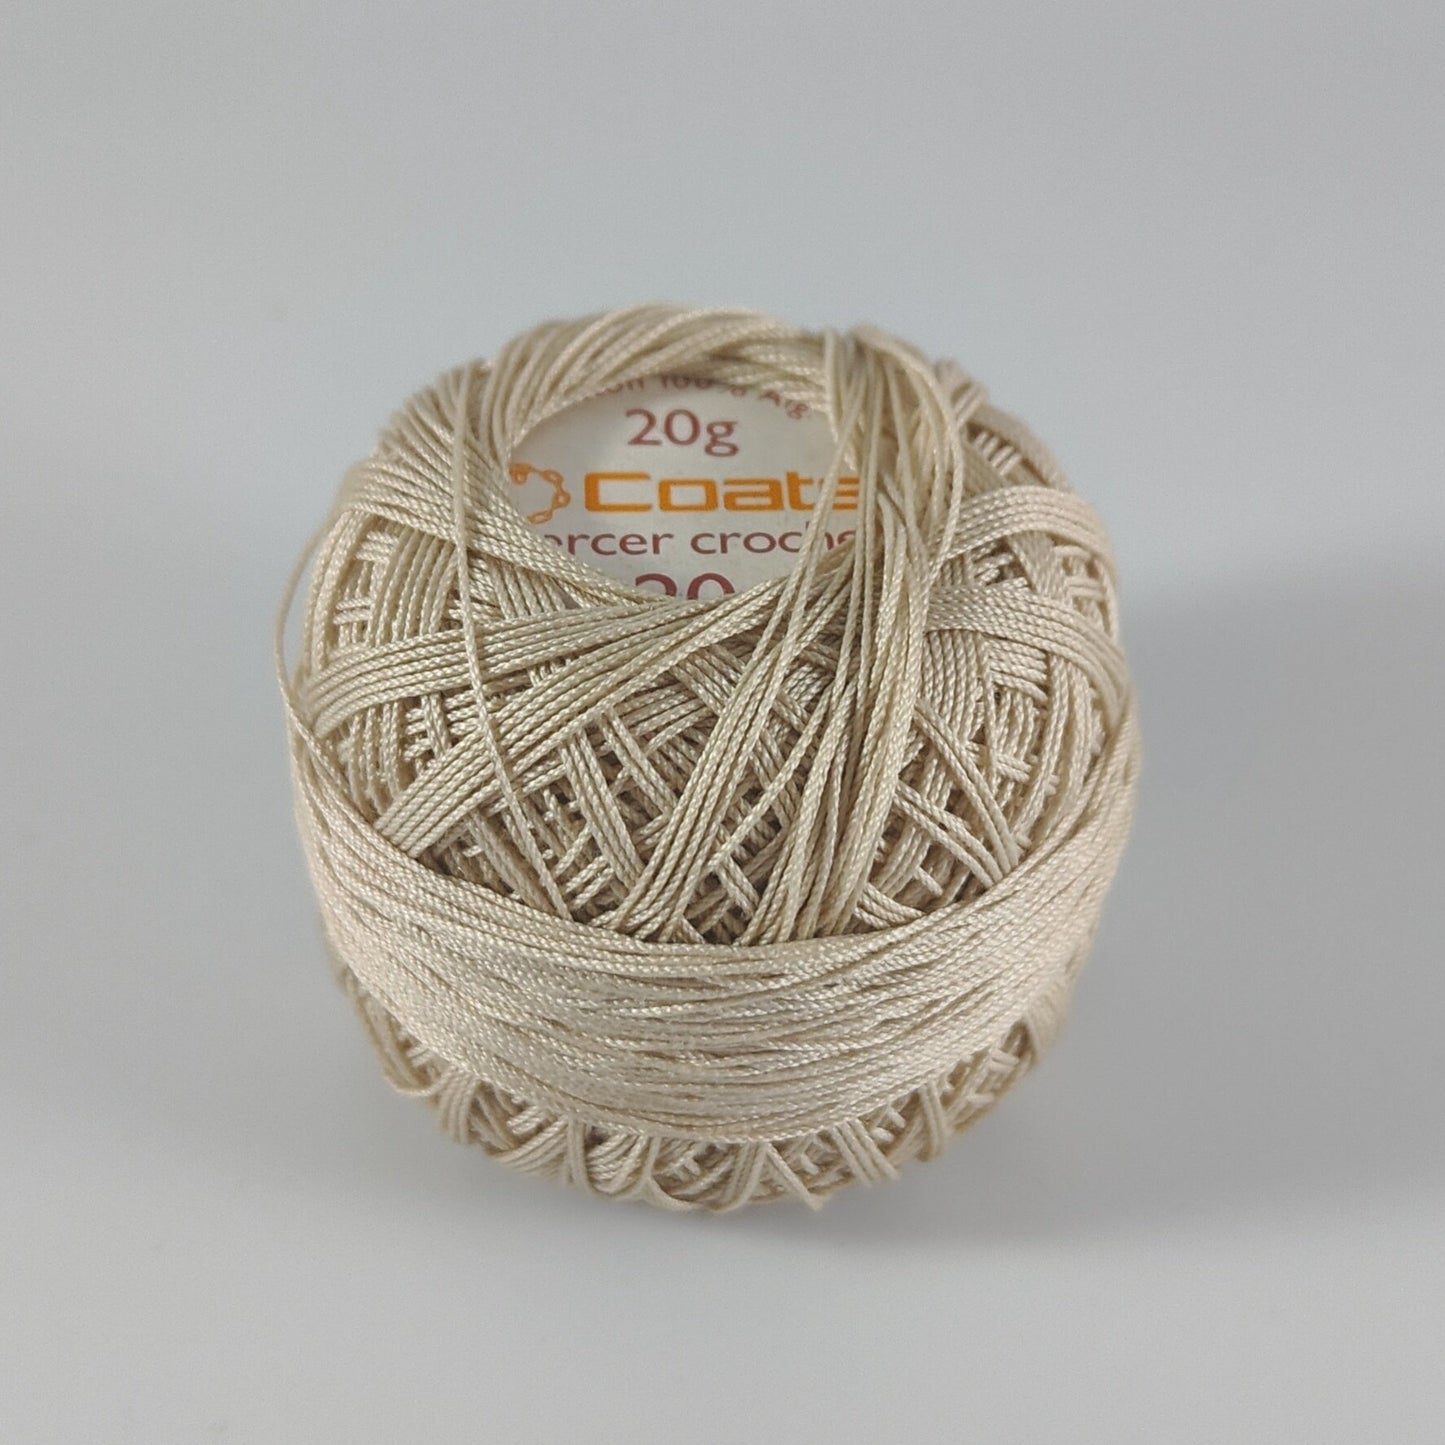 Mercer Crochet Cotton No 20 - 20g - Colour 610